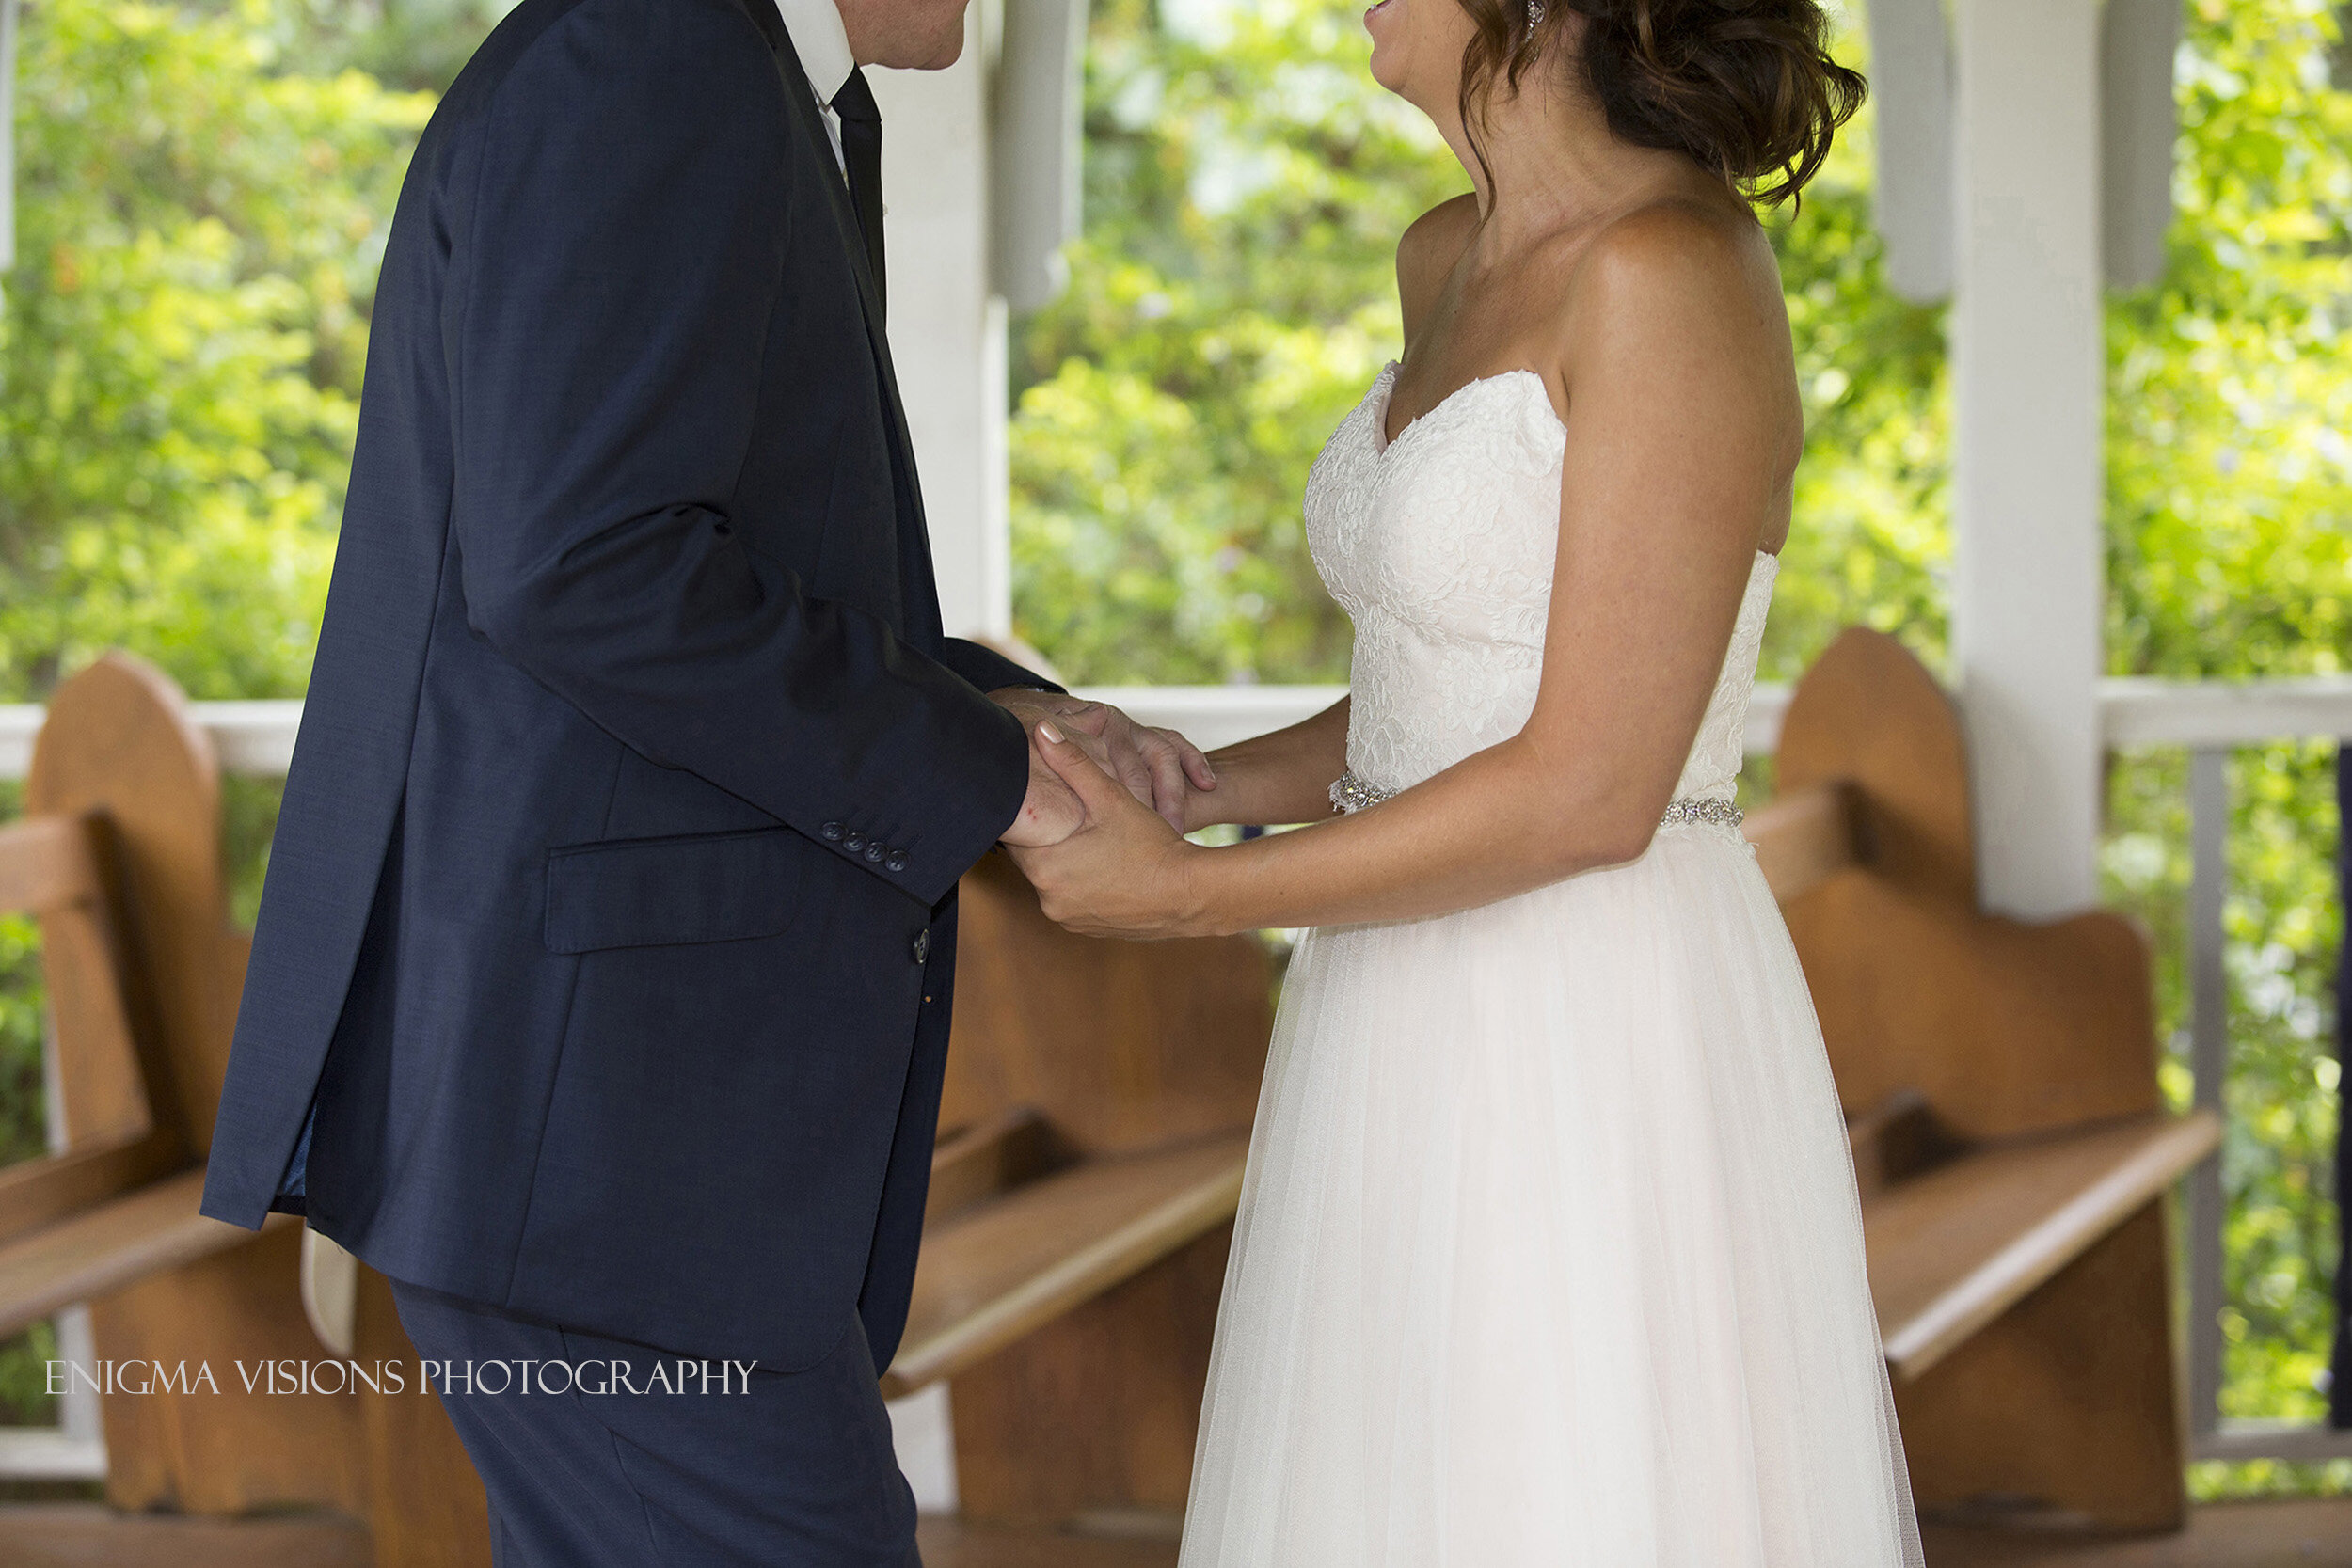 enigma_visions_photography_wedding-Belinda+Howard (18).jpg